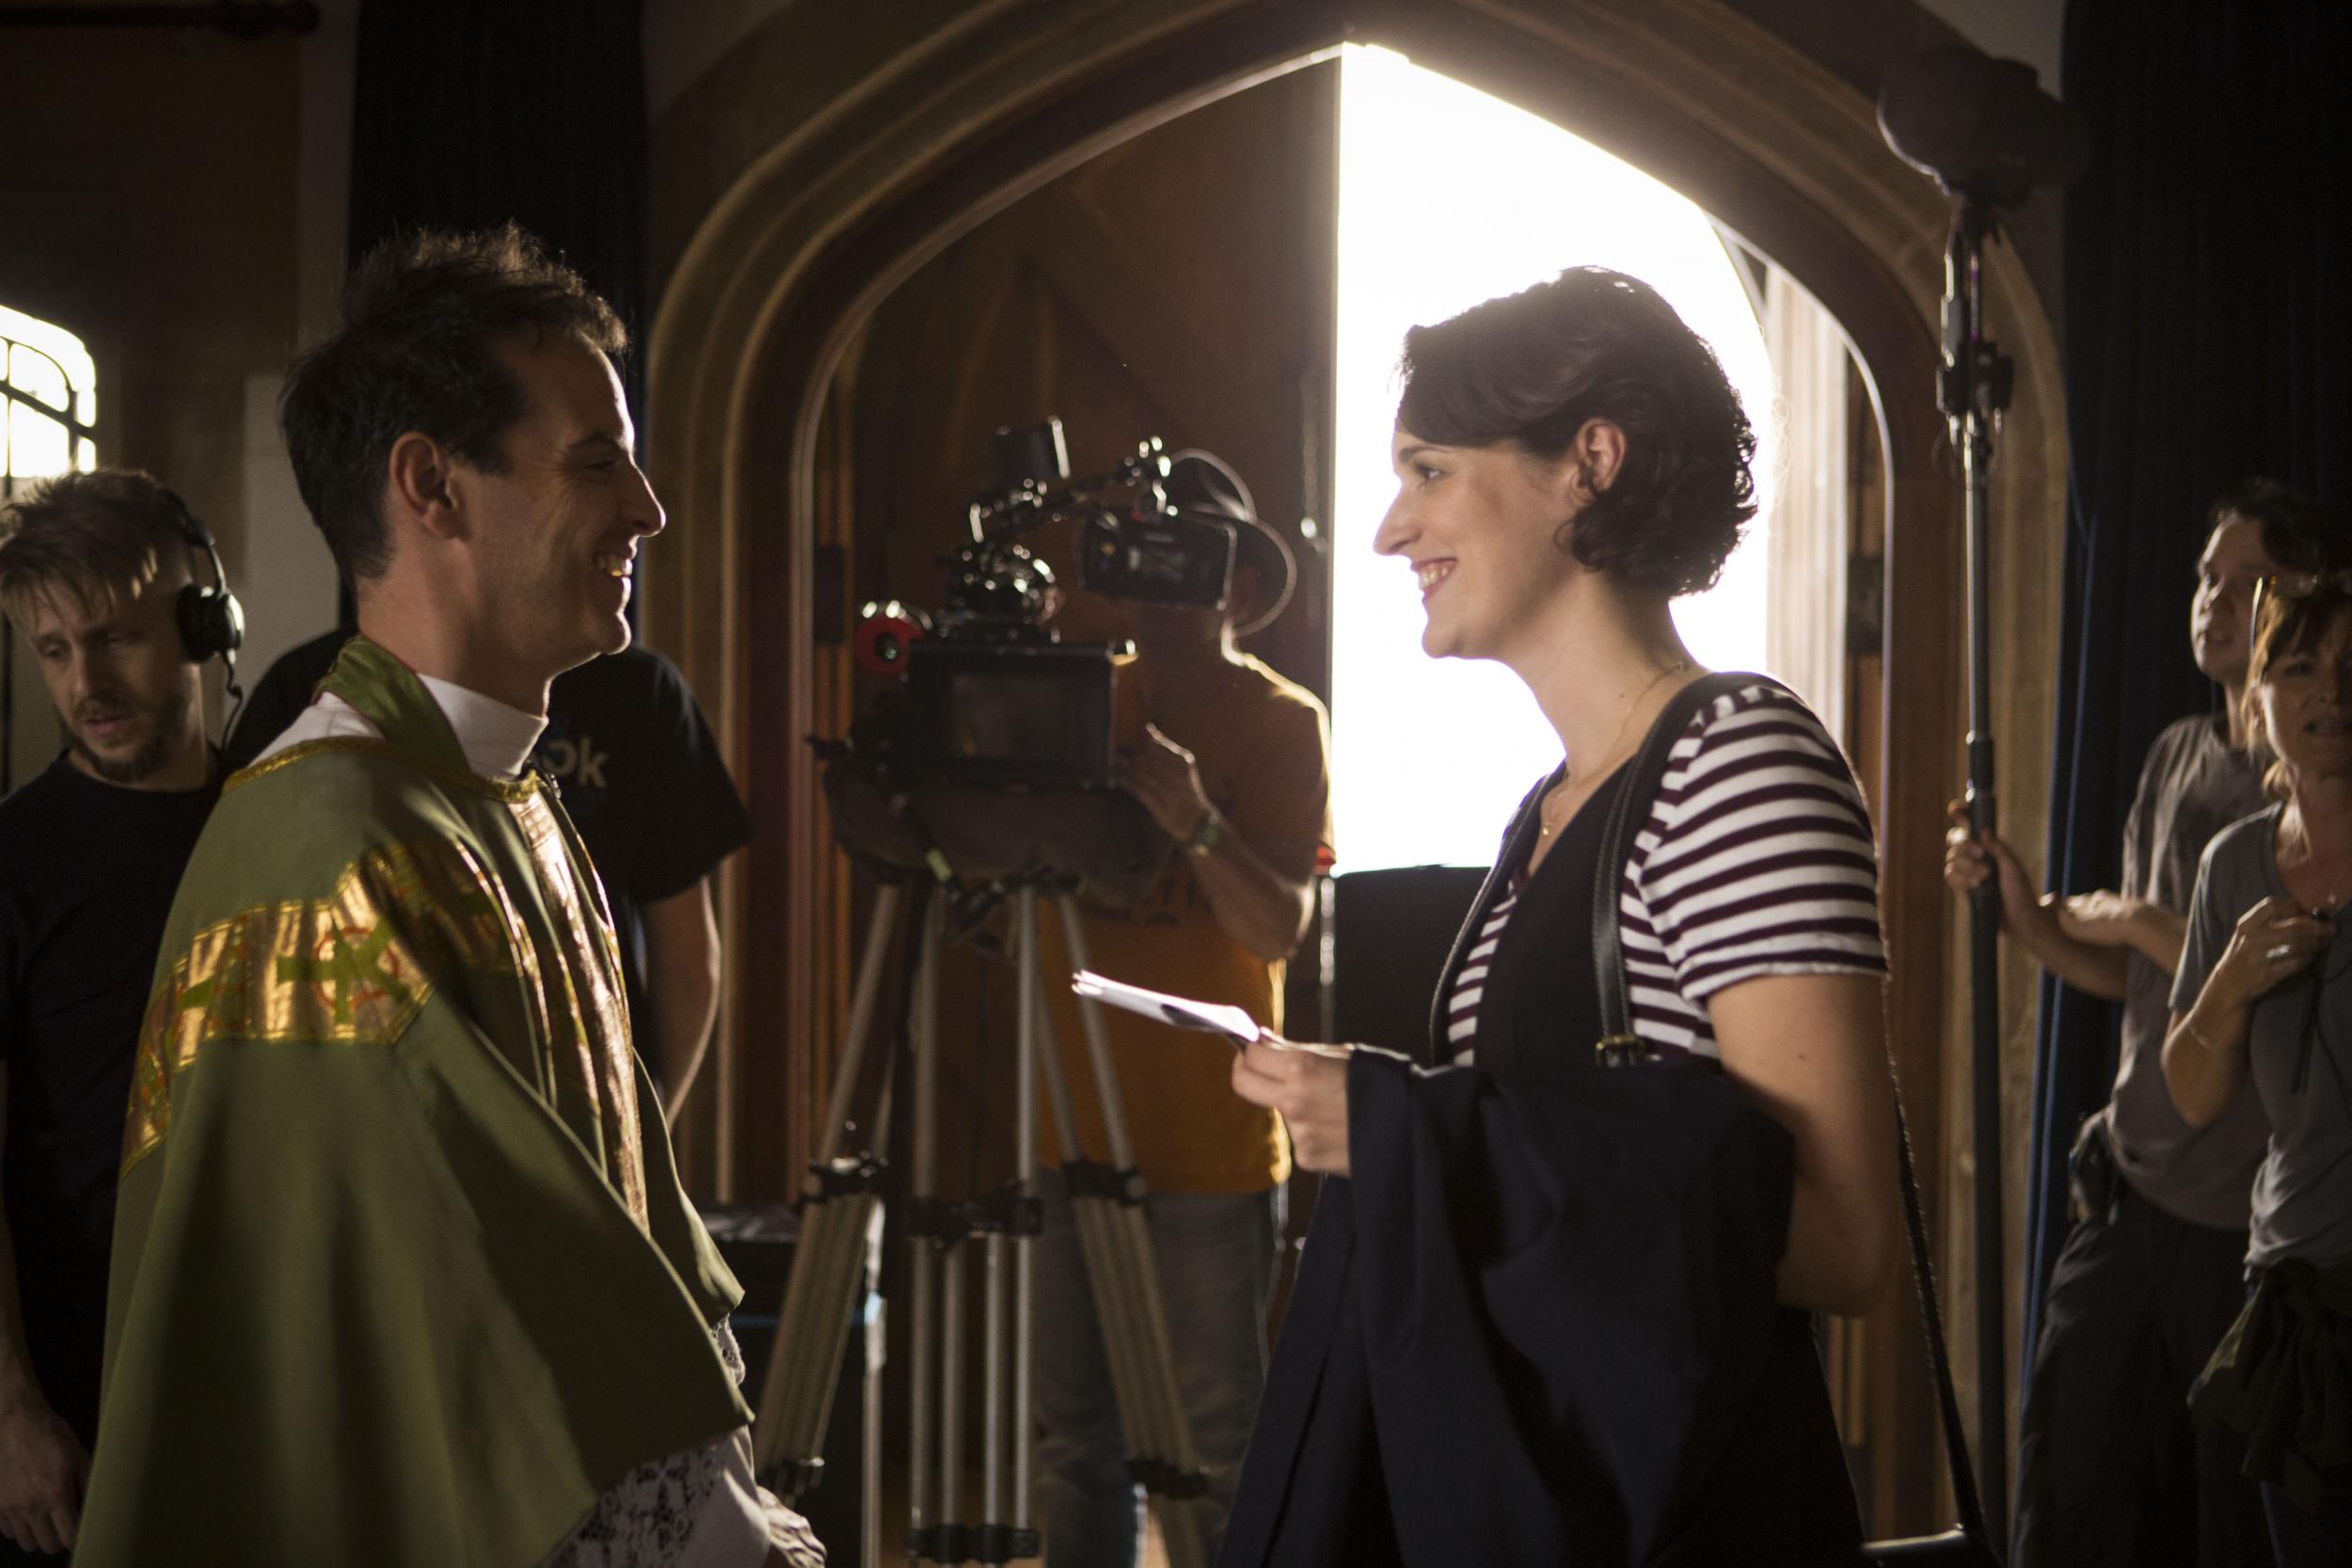 Andrew Scott and Waller-Bridge filming scenes for the show